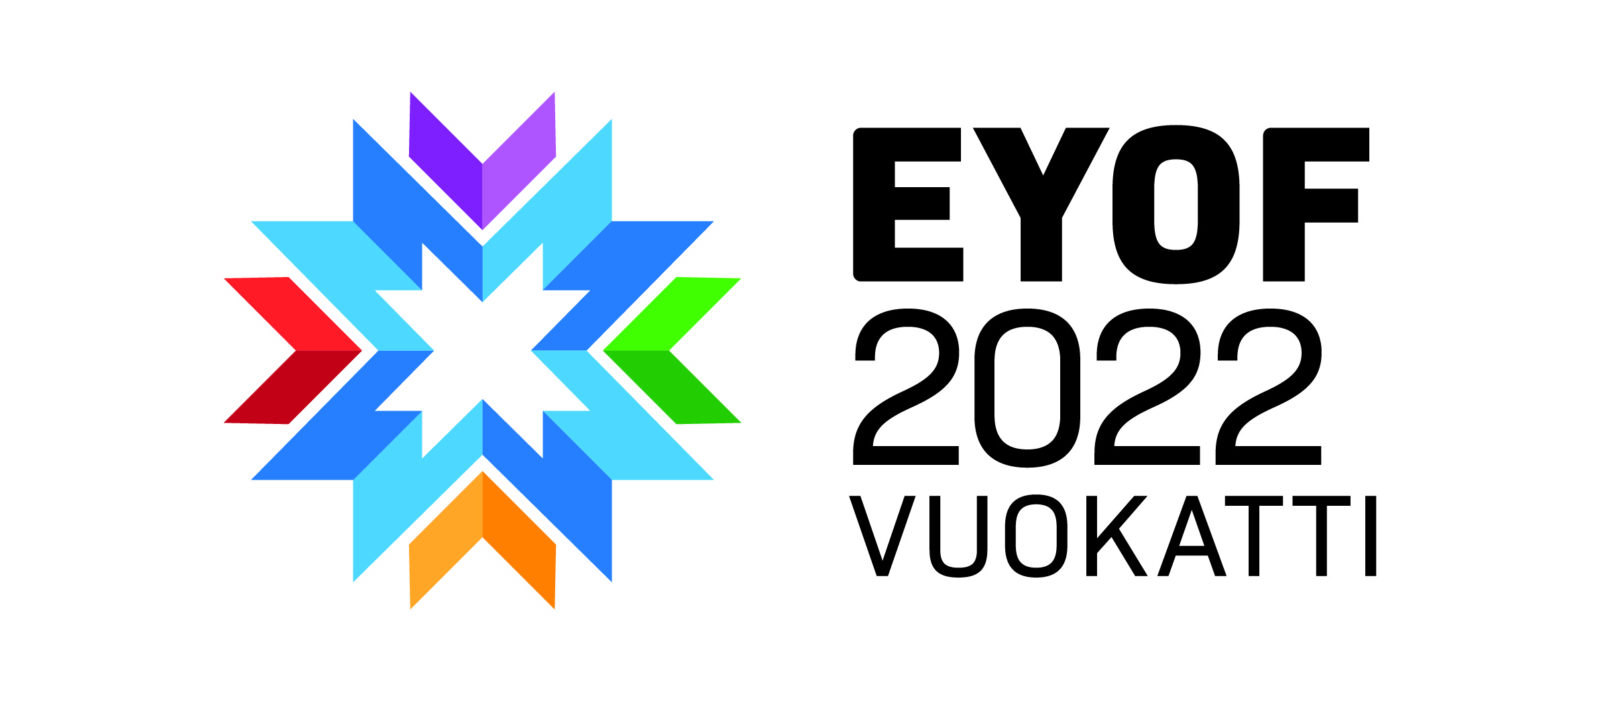 EYOF Vuokatti 2022 kilpailujen logo